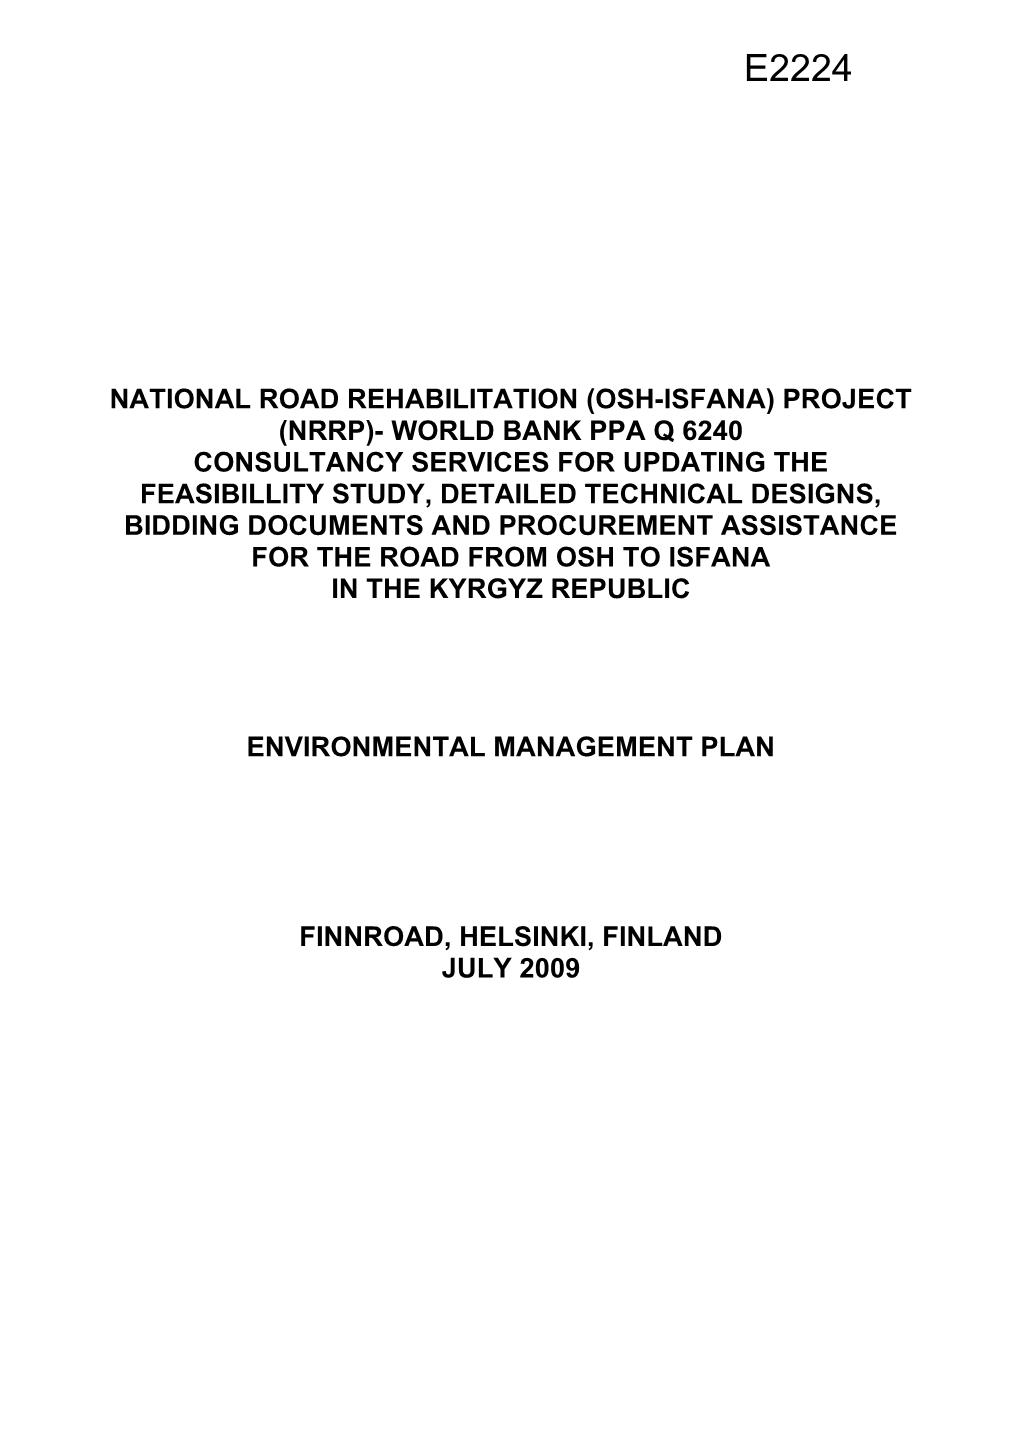 National Road Rehabilitation (Osh-Isfana) Project (Nrrp)- World Bank Ppa Q 6240